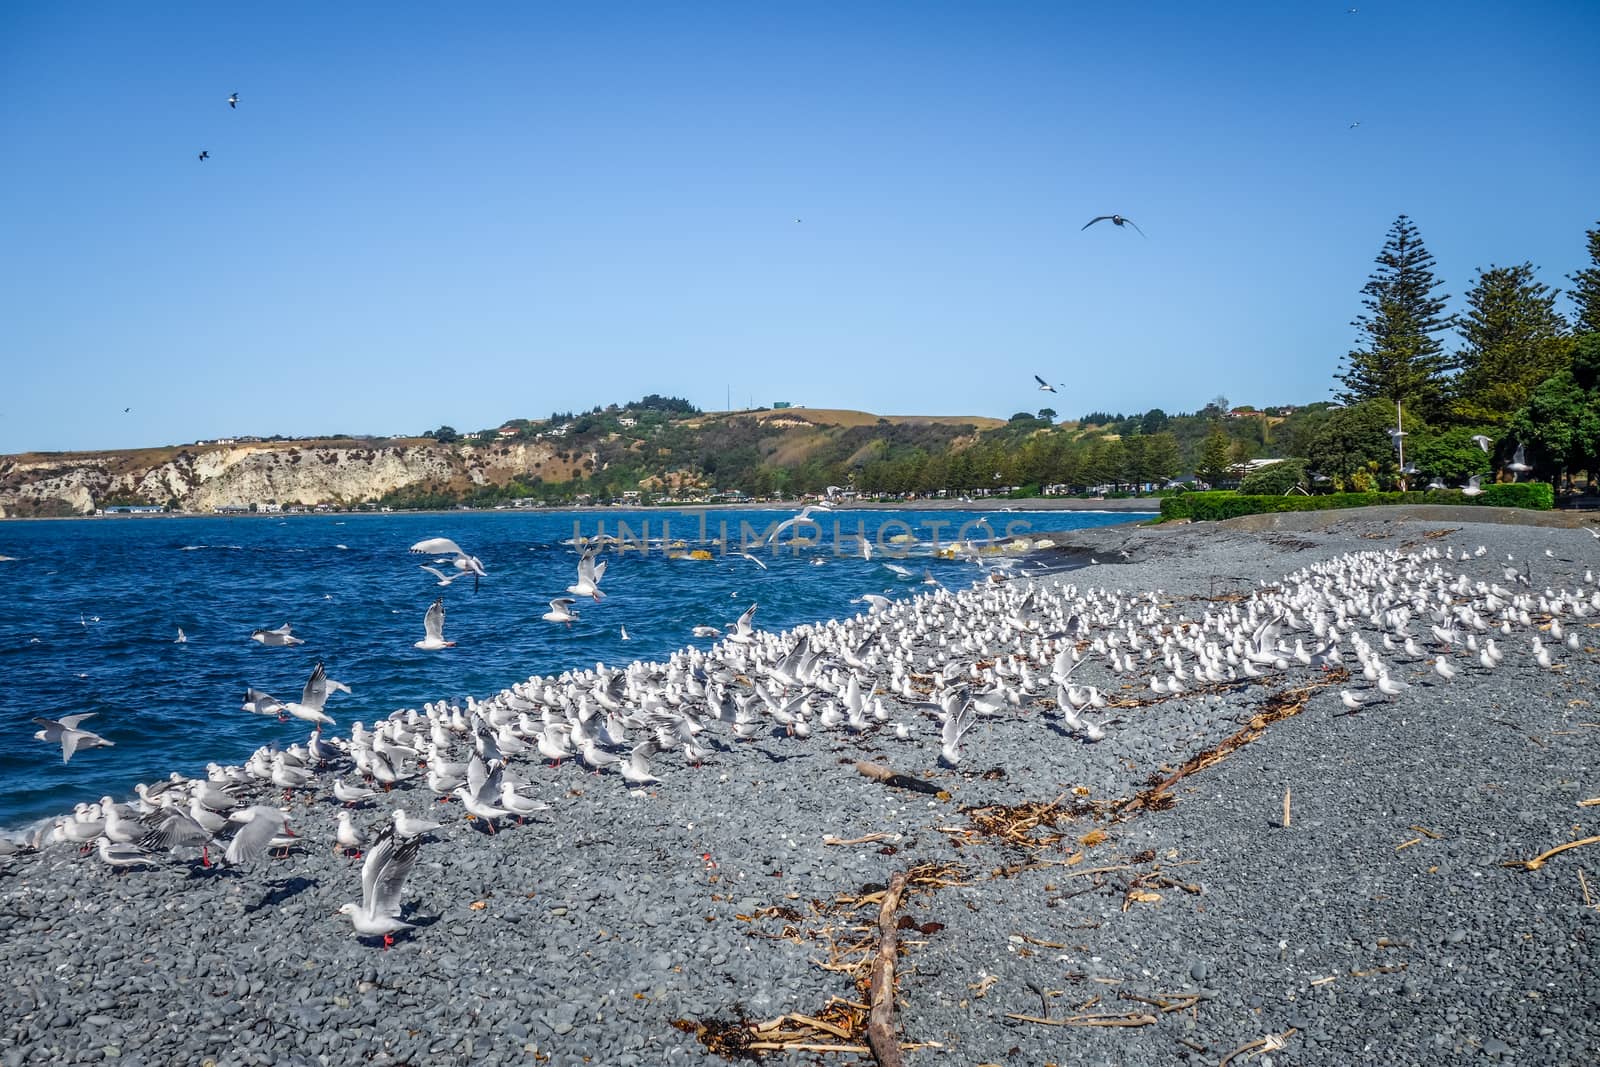 Seagulls on Kaikoura beach, New Zealand by daboost